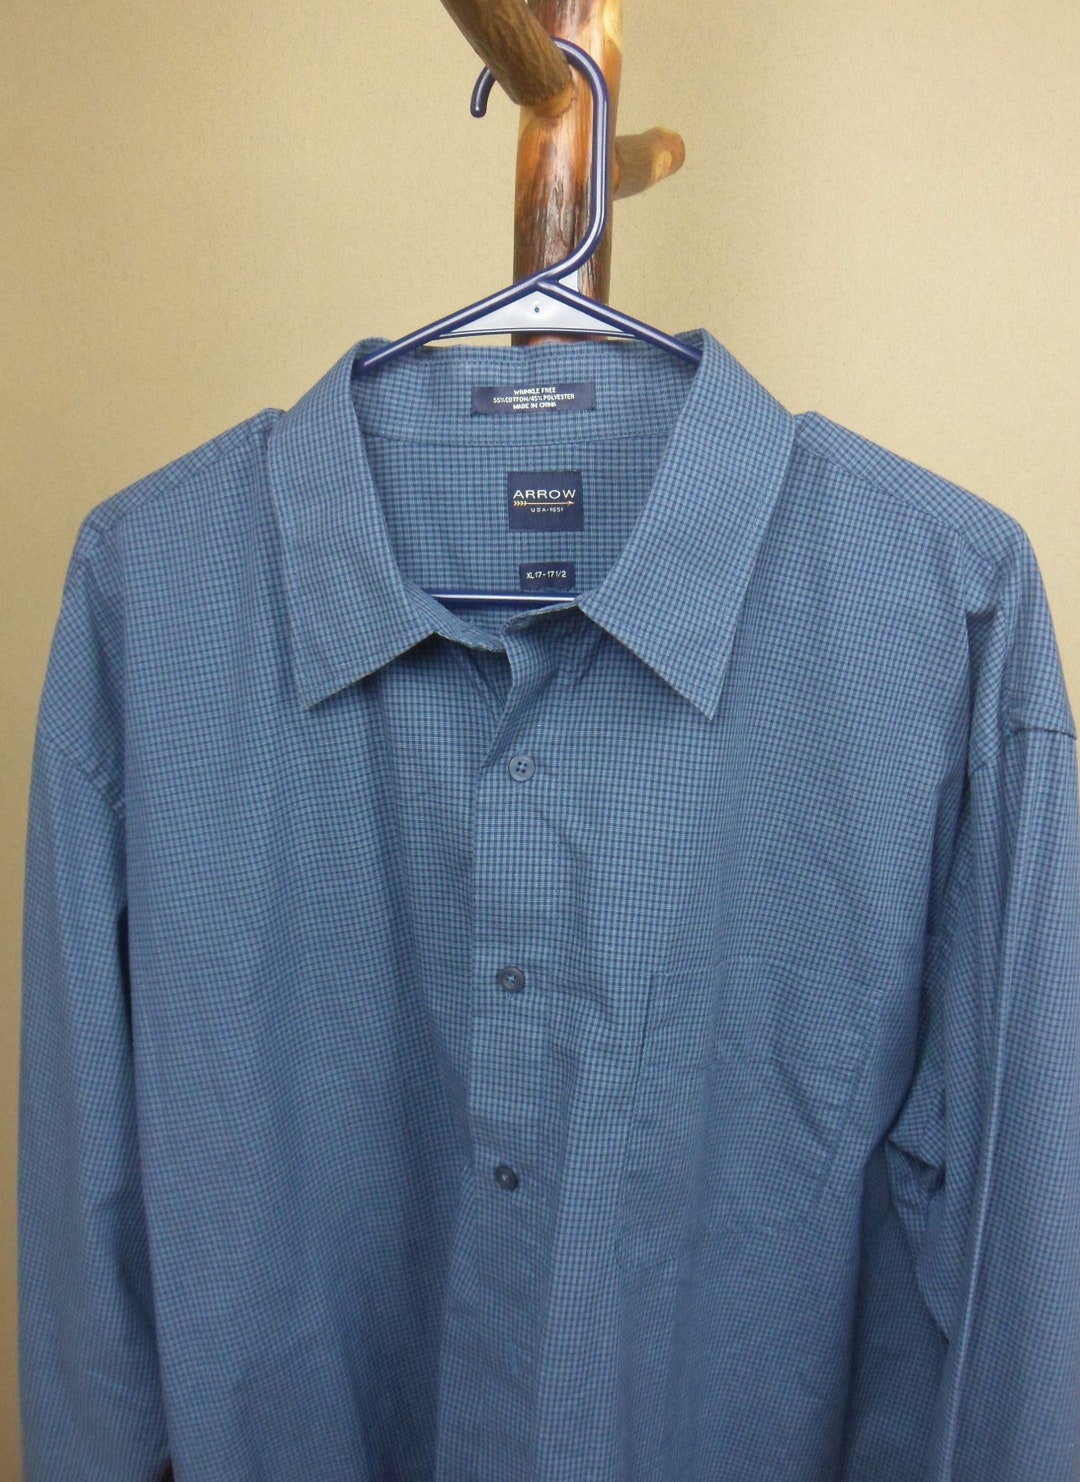 Arrow Button Down Shirt Mens Vintage Long Sleeve Dark Blue - Etsy